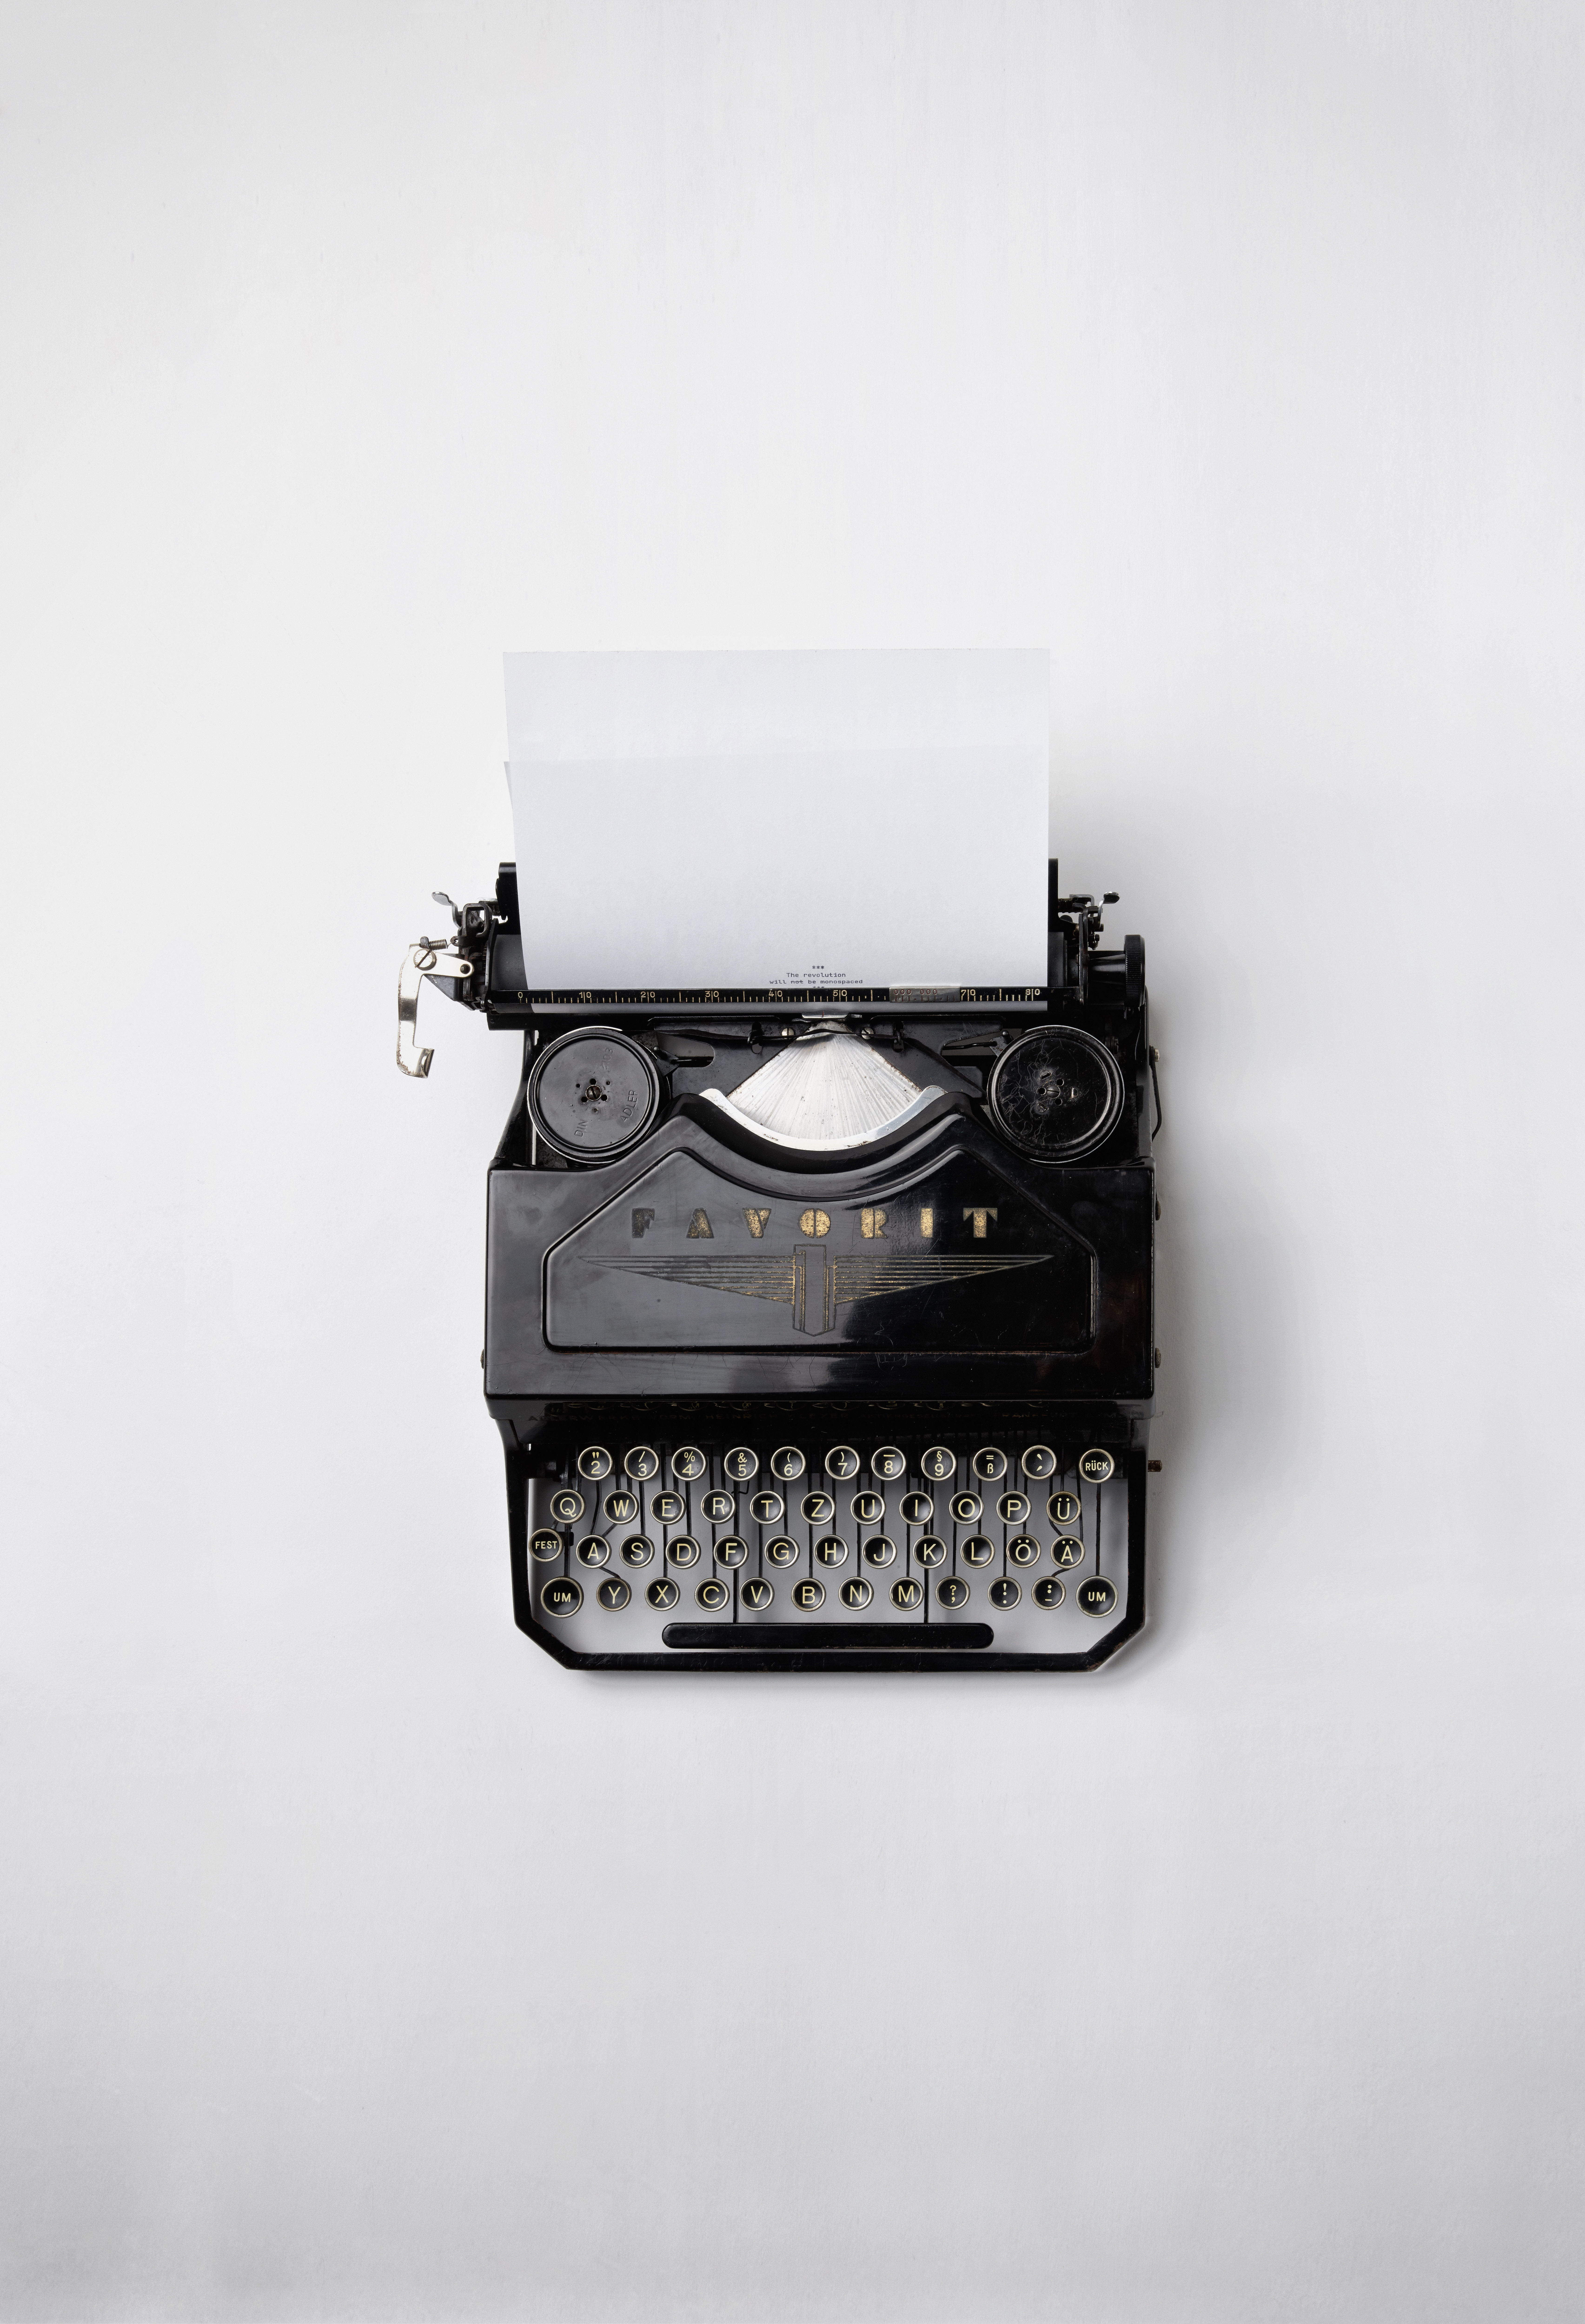 Mechanical typewriter on white background